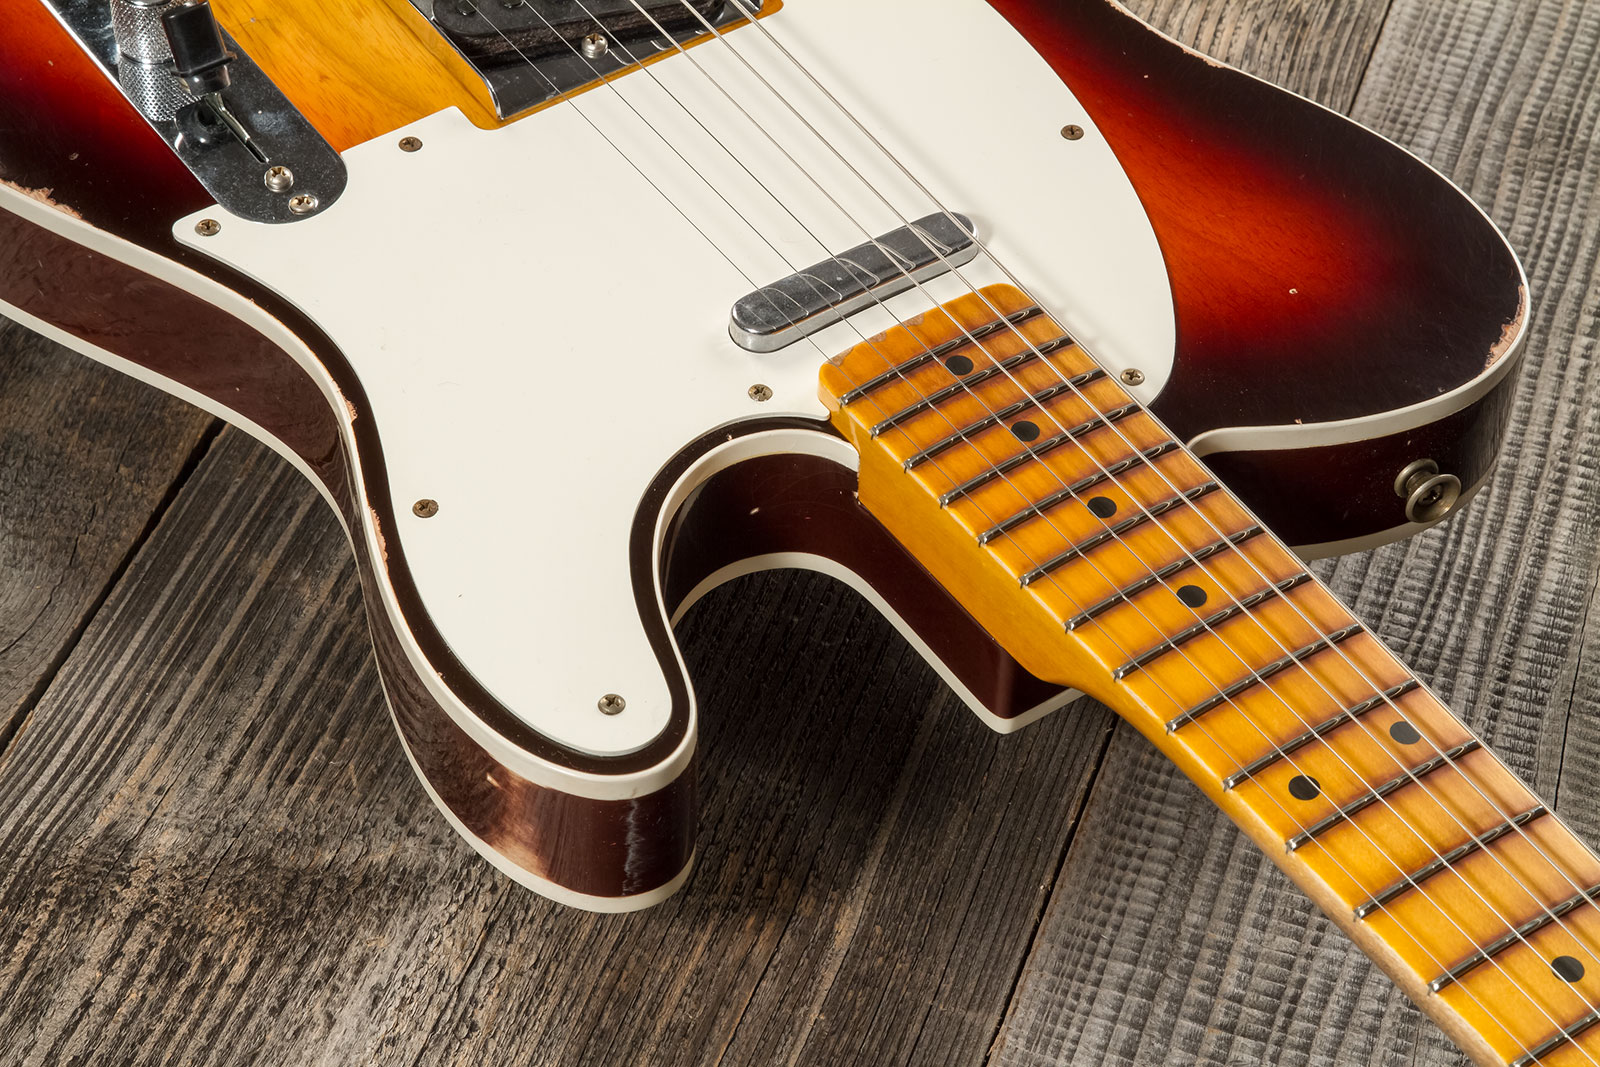 Fender Custom Shop Tele Custom 1959 2s Ht Mn #cz573750 - Relic Chocolate 3-color Sunburst - Tel shape electric guitar - Variation 4